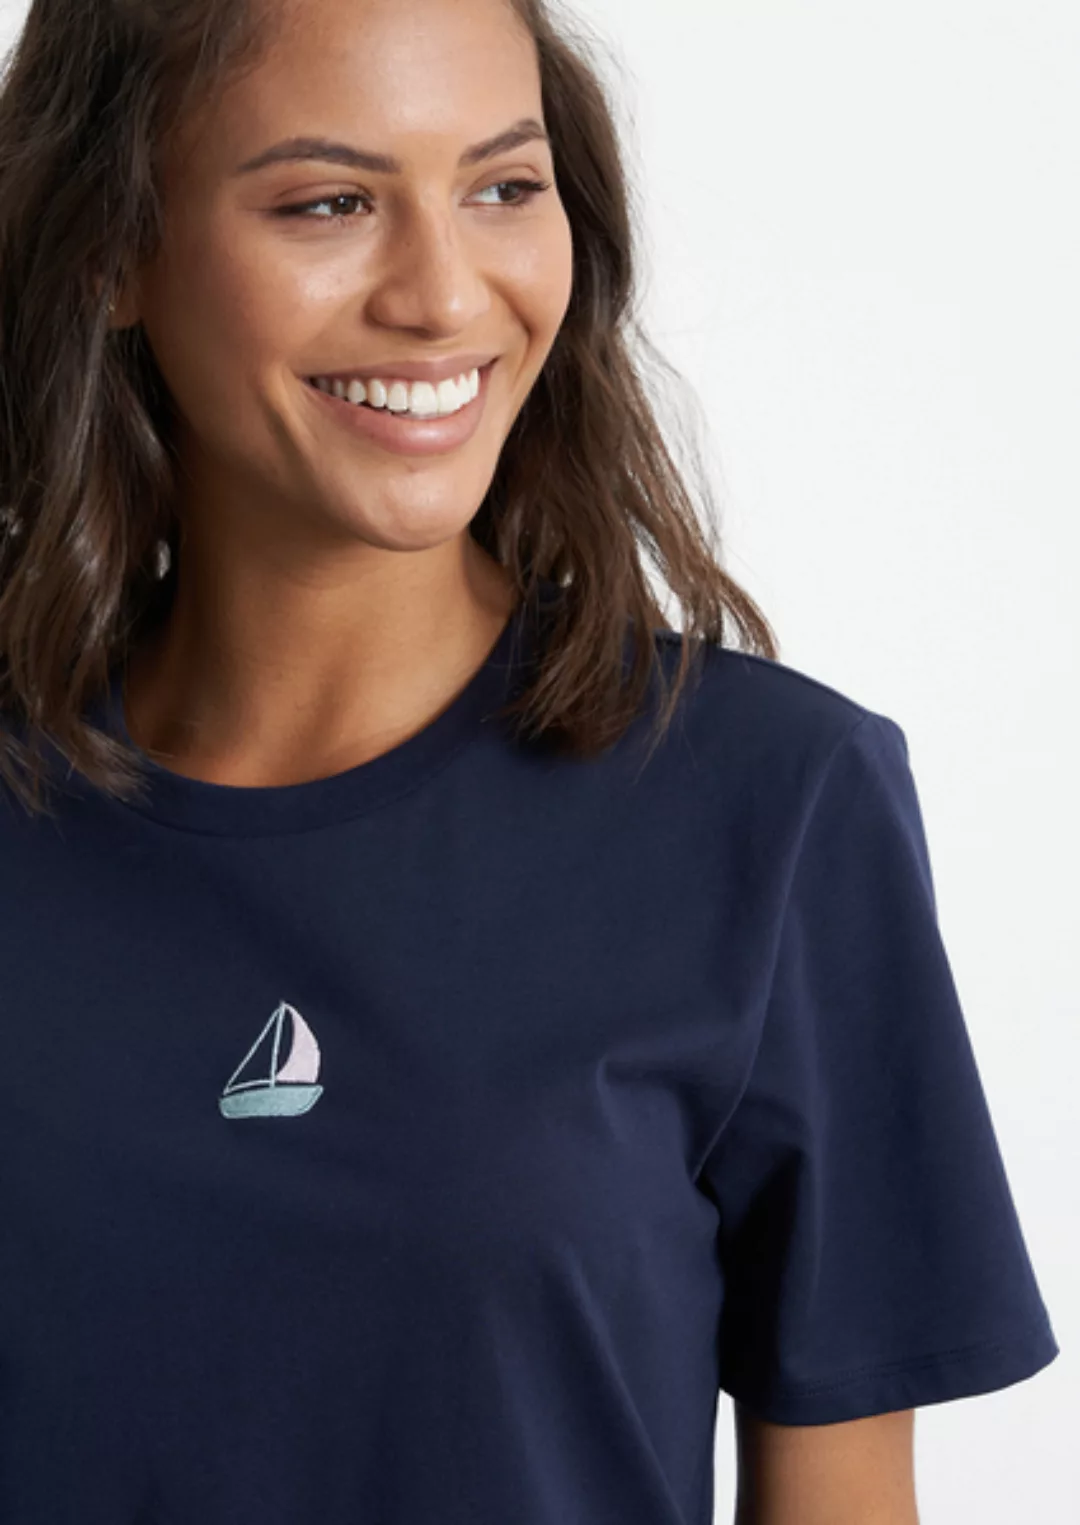 Print Damen T-shirt #Sailingboat Aus Baumwolle (Bio) | Classic T-shirt #Sai günstig online kaufen